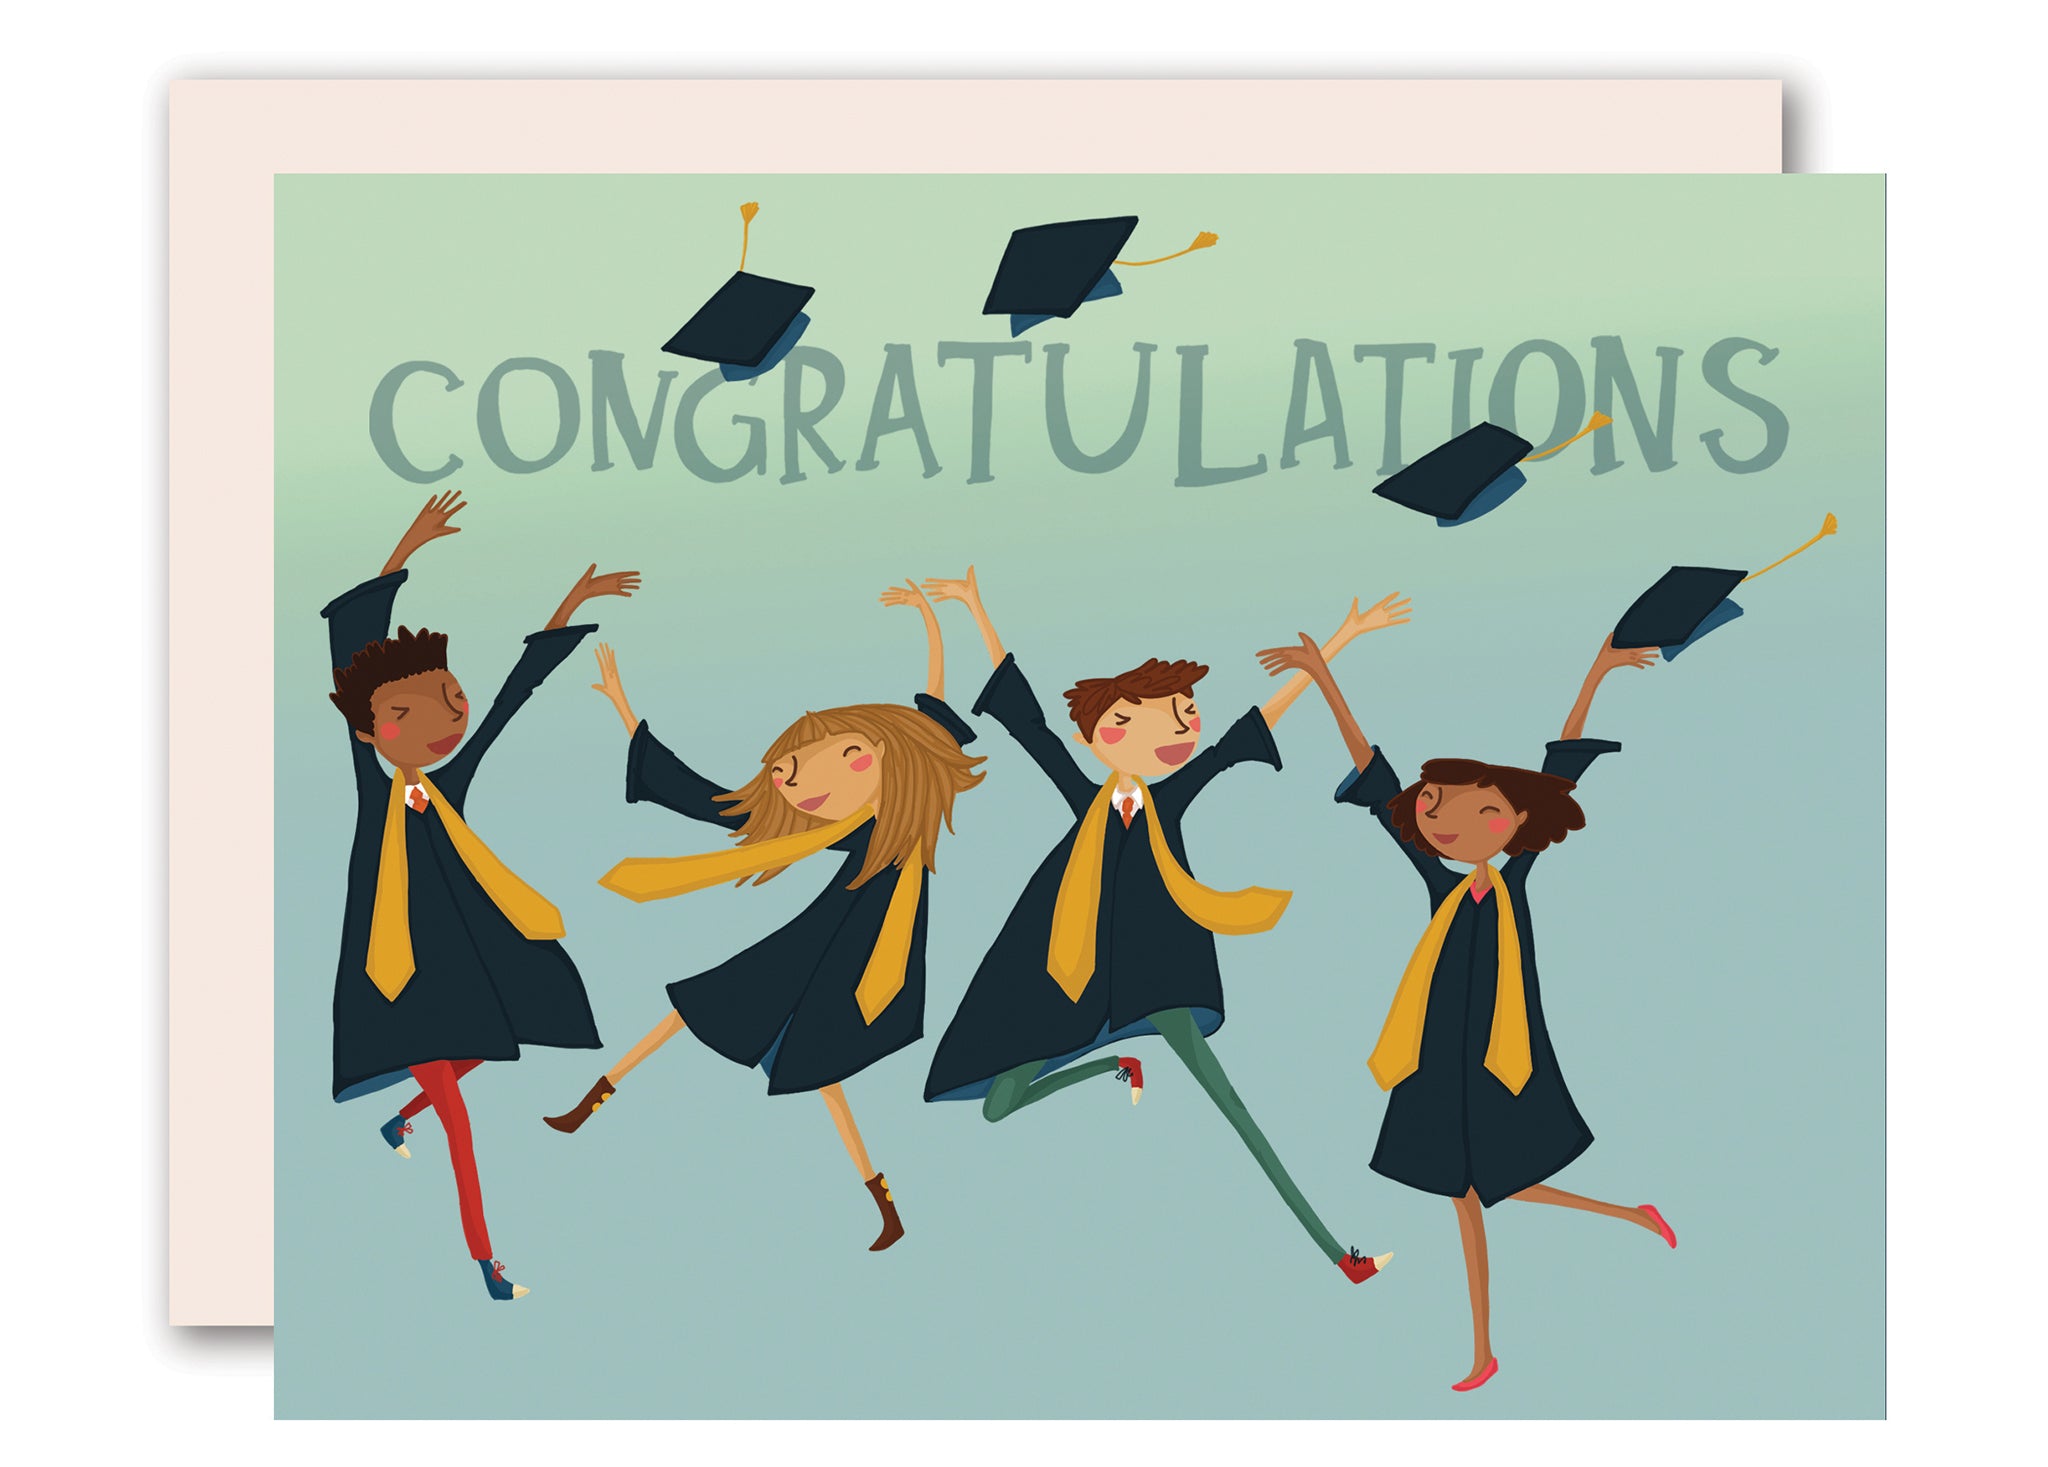 Congratulations Images For Graduation